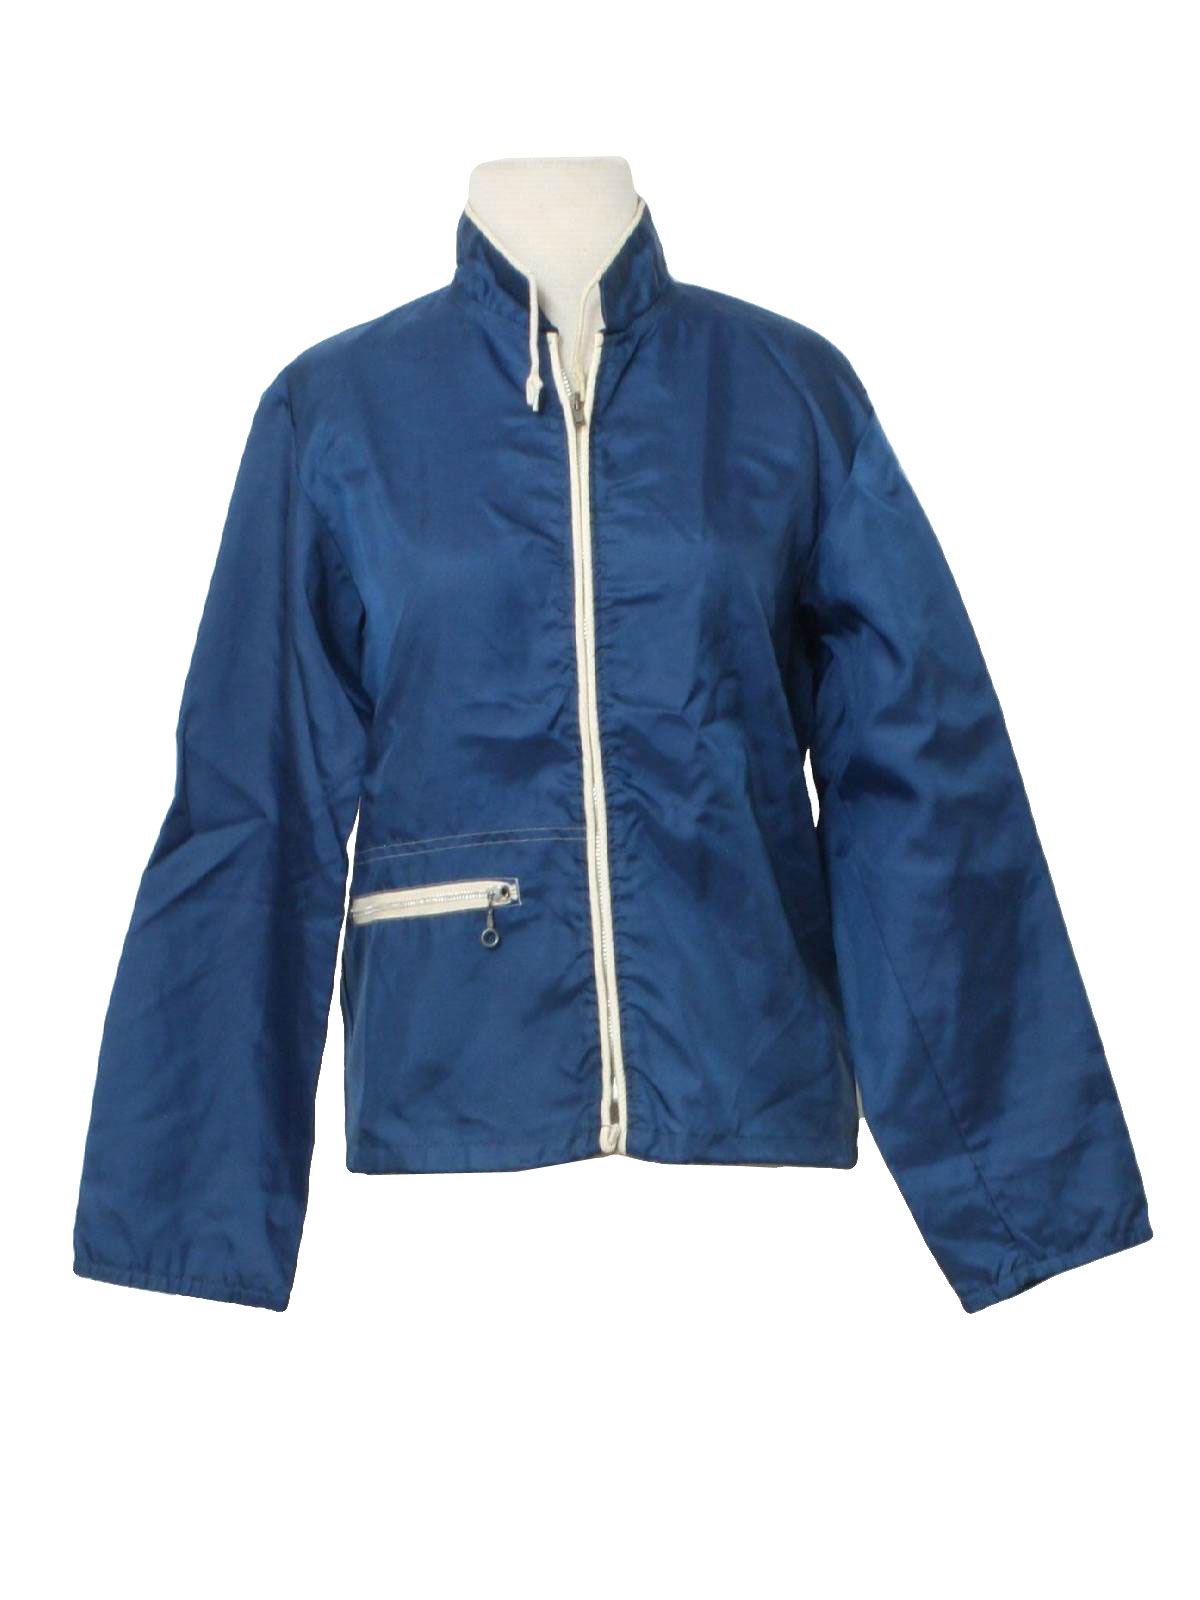 Retro Seventies Jacket: 70s -Sears- Womens cobalt blue nylon ...